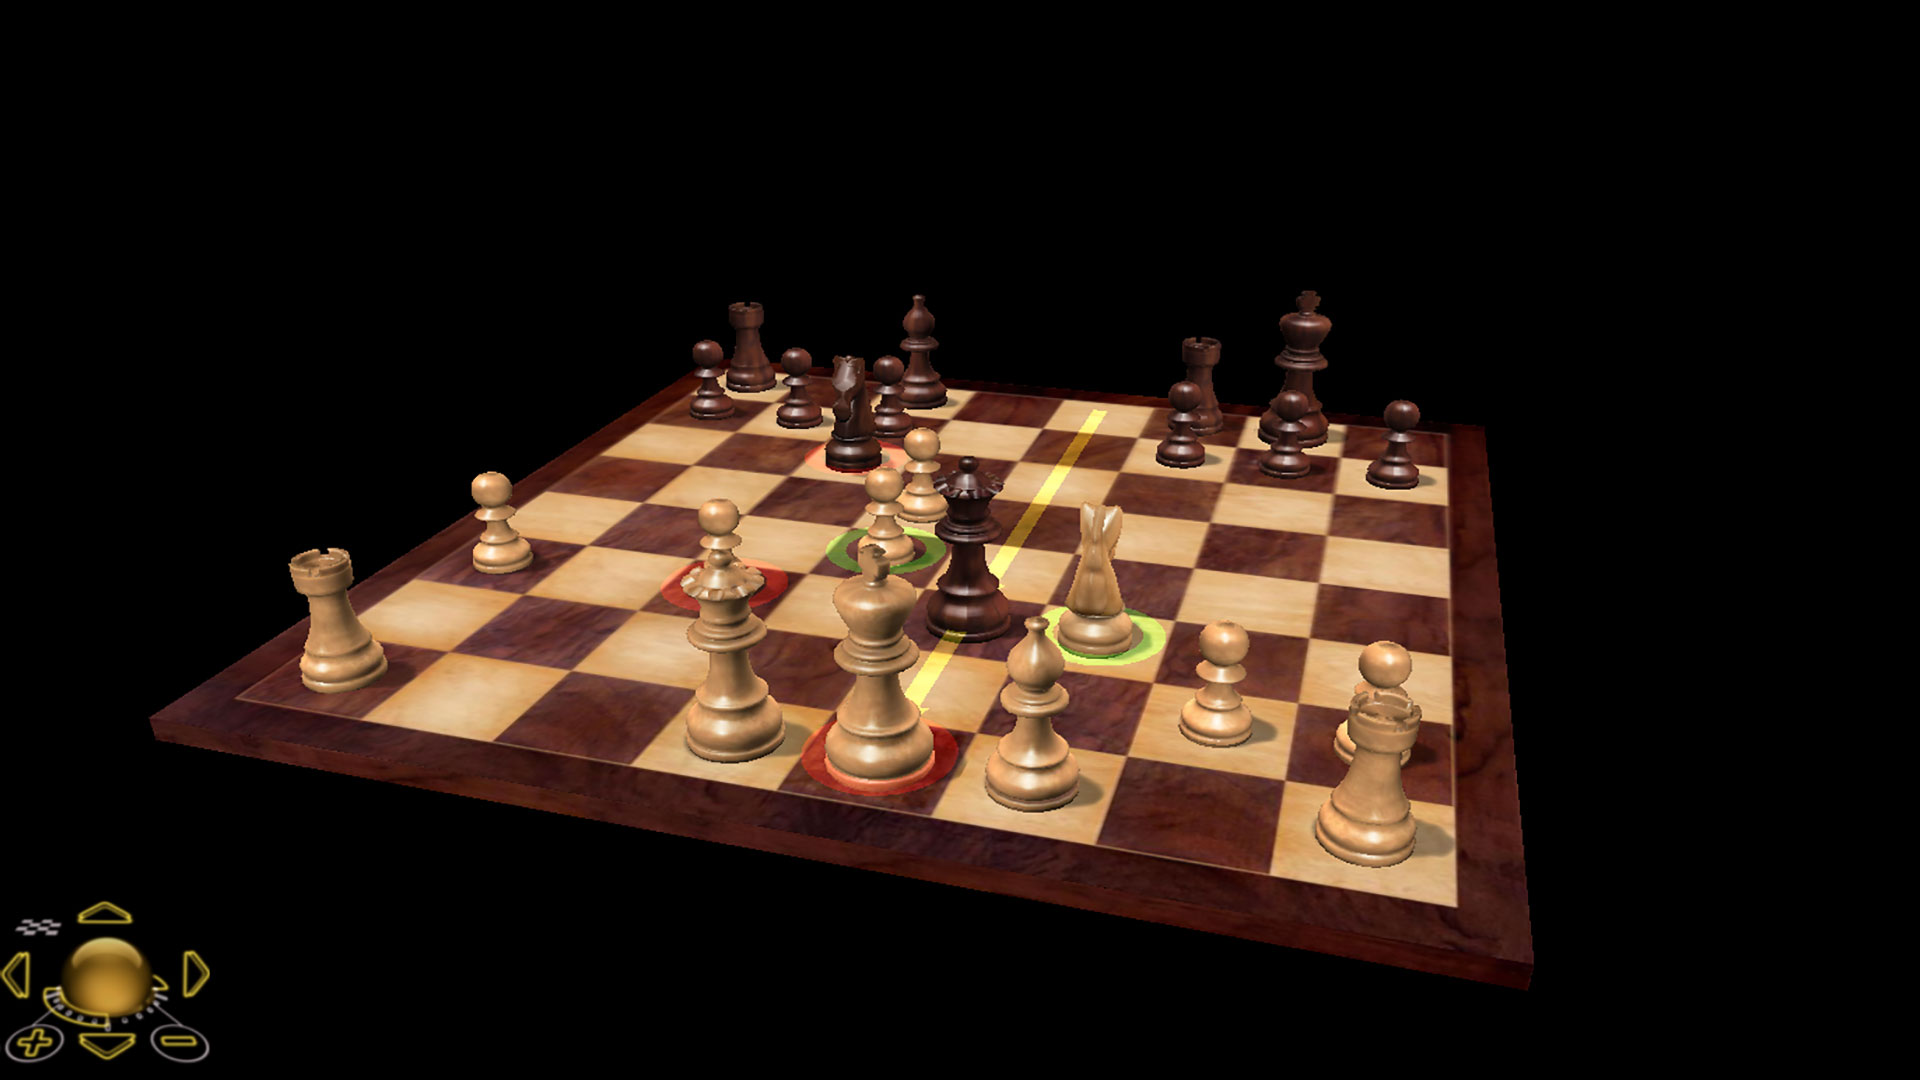 fritz chess 16